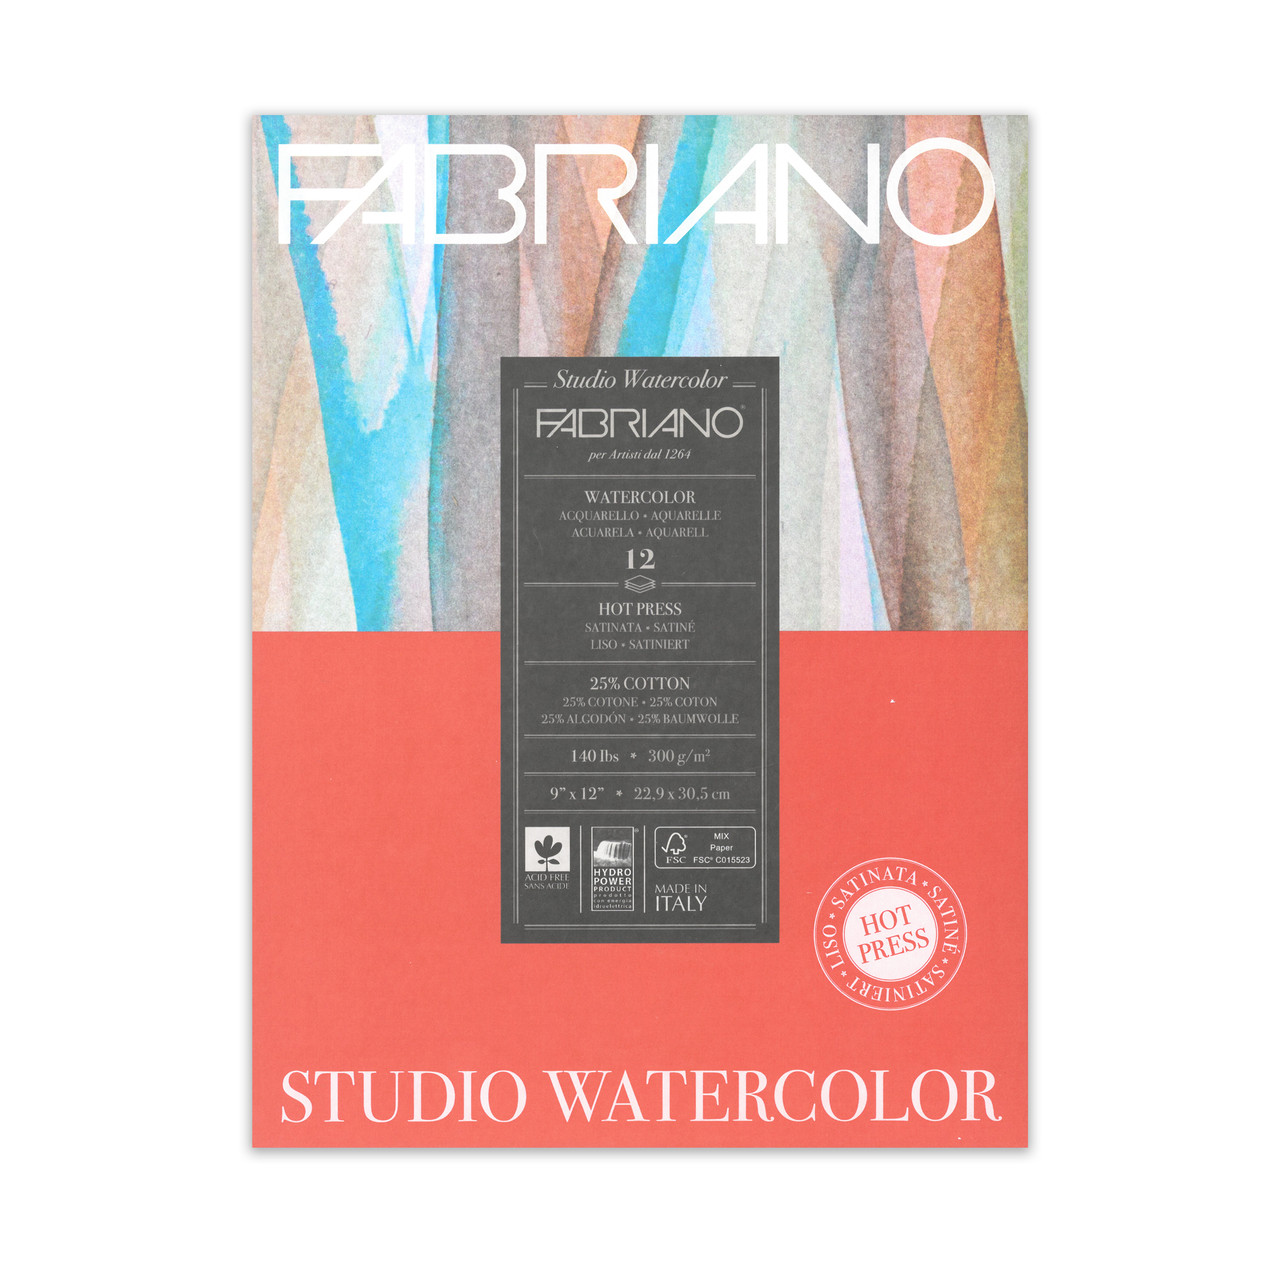 Fabriano Studio Watercolor Pad, 12 sheets, 9 x 12